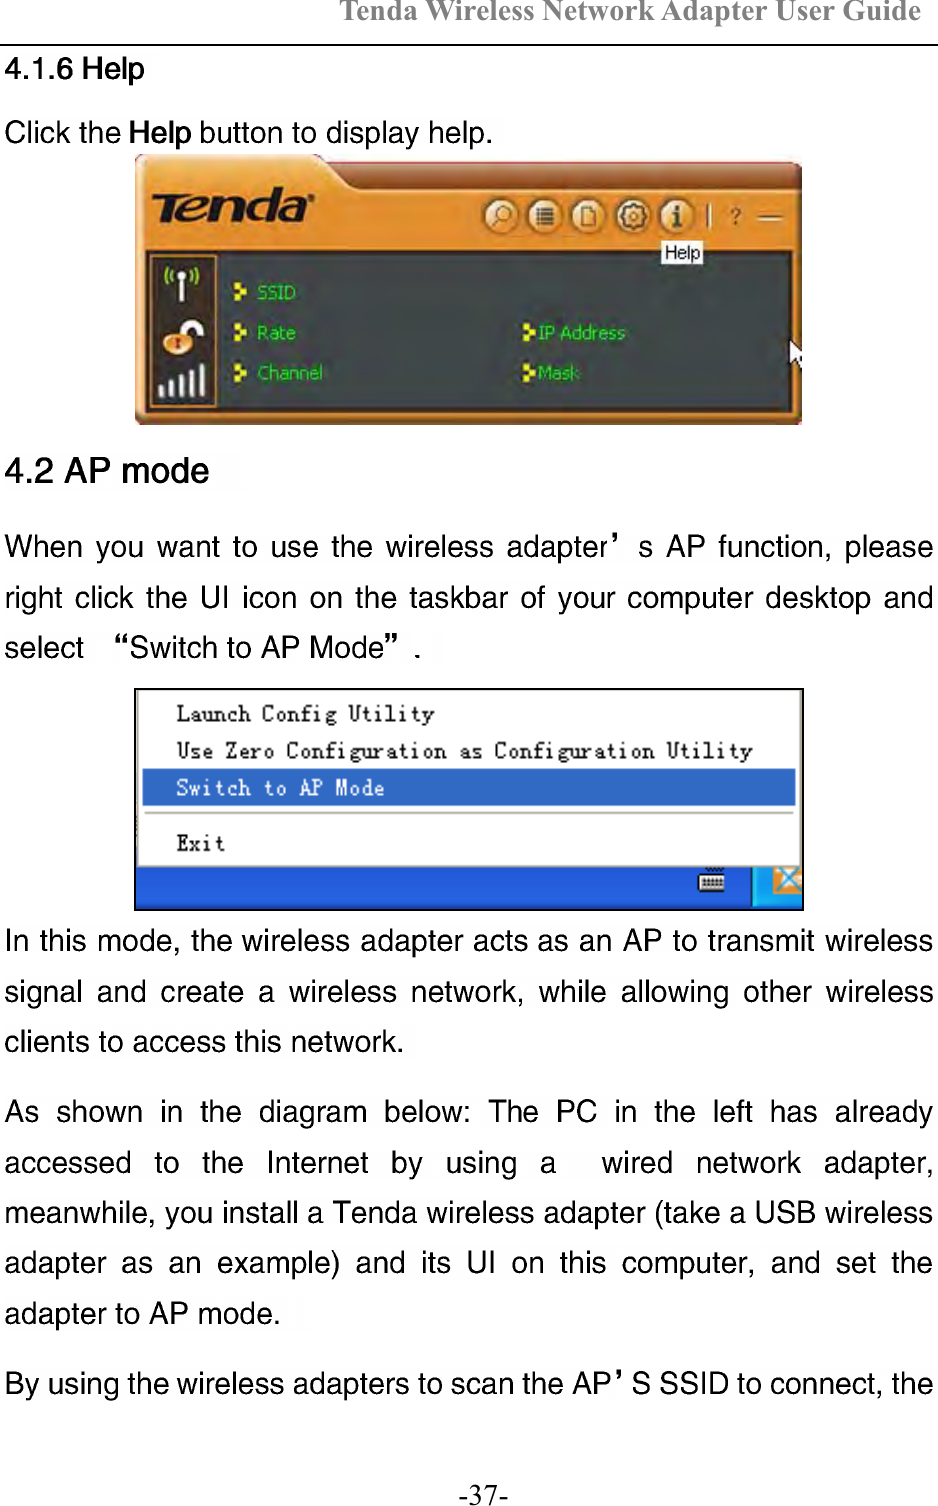 Tenda Wireless Network Adapter User Guide  -37- 